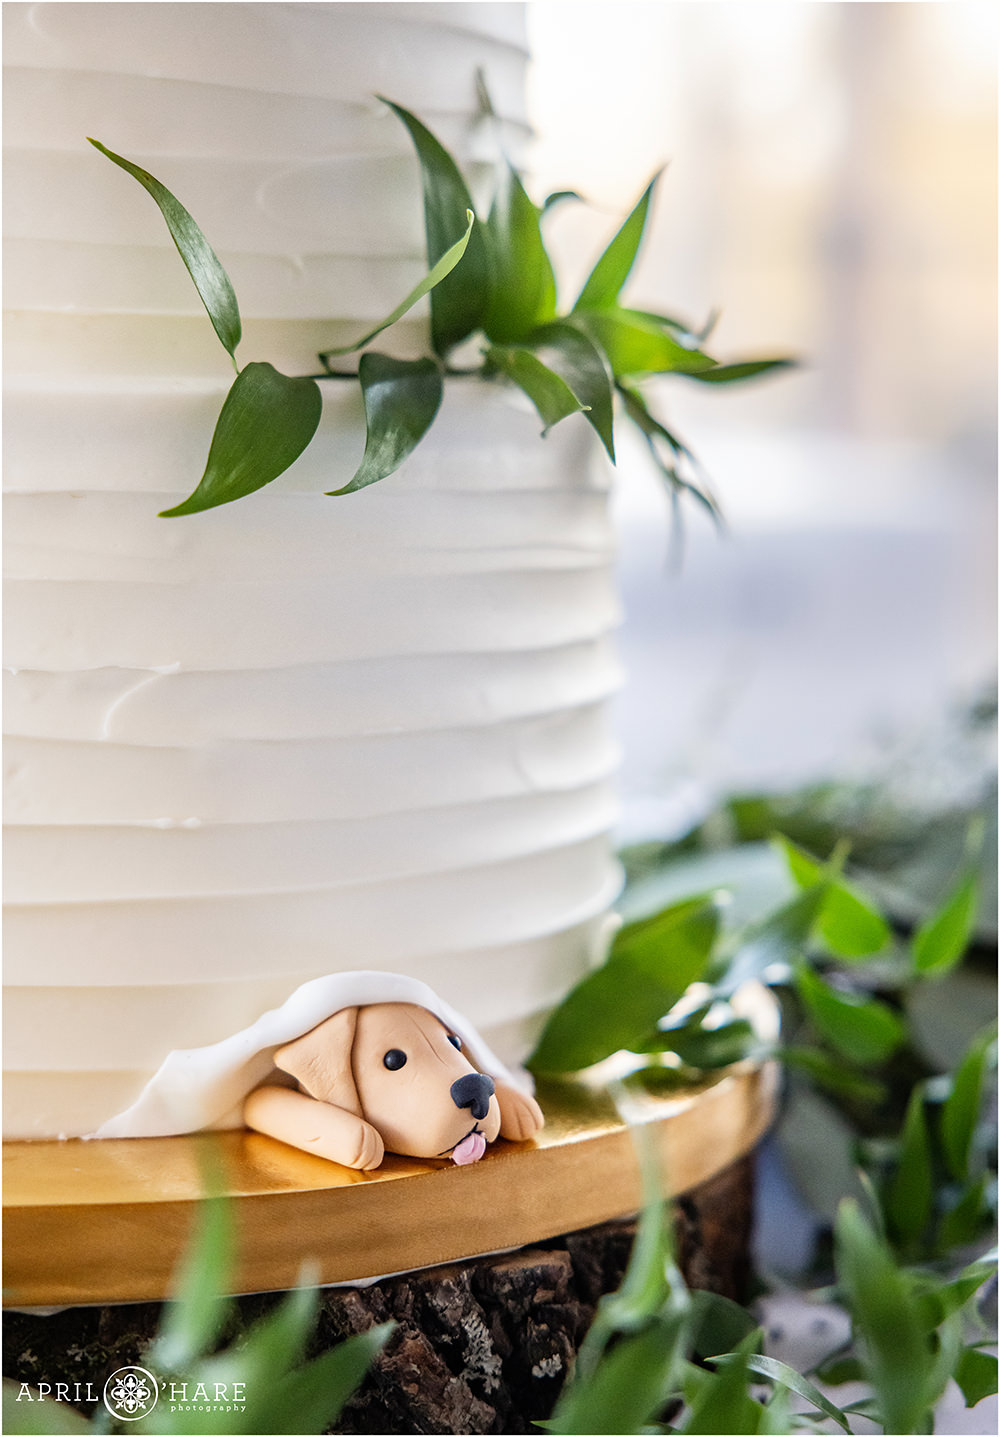 White wedding cake with a cute fondant dog peeking out underneath it